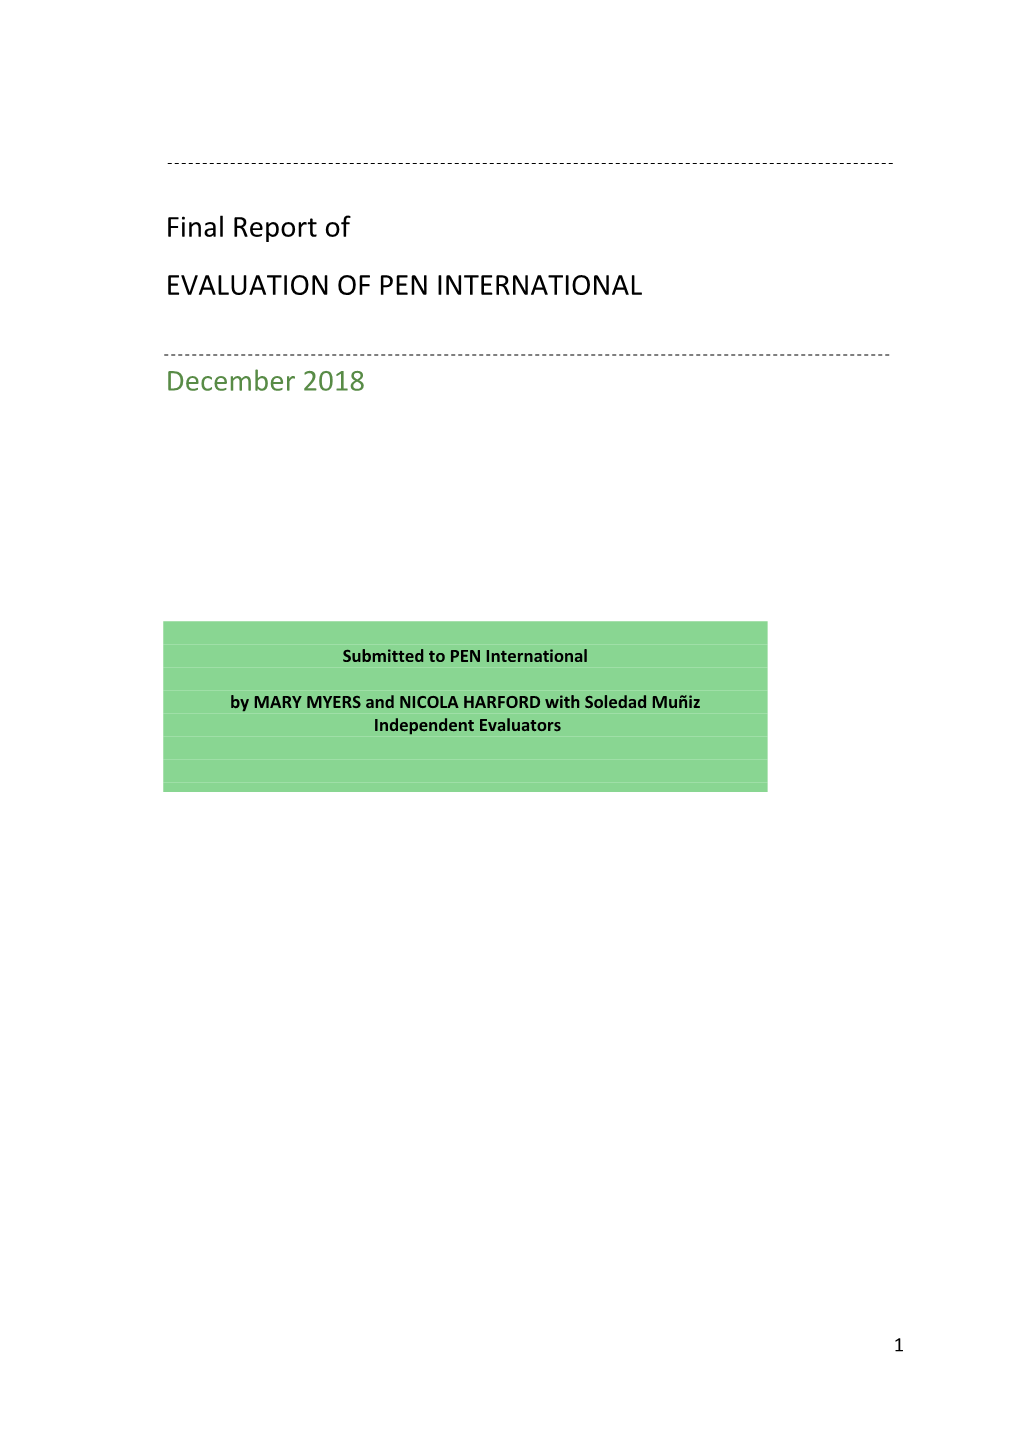 Final Report of EVALUATION of PEN INTERNATIONAL December 2018